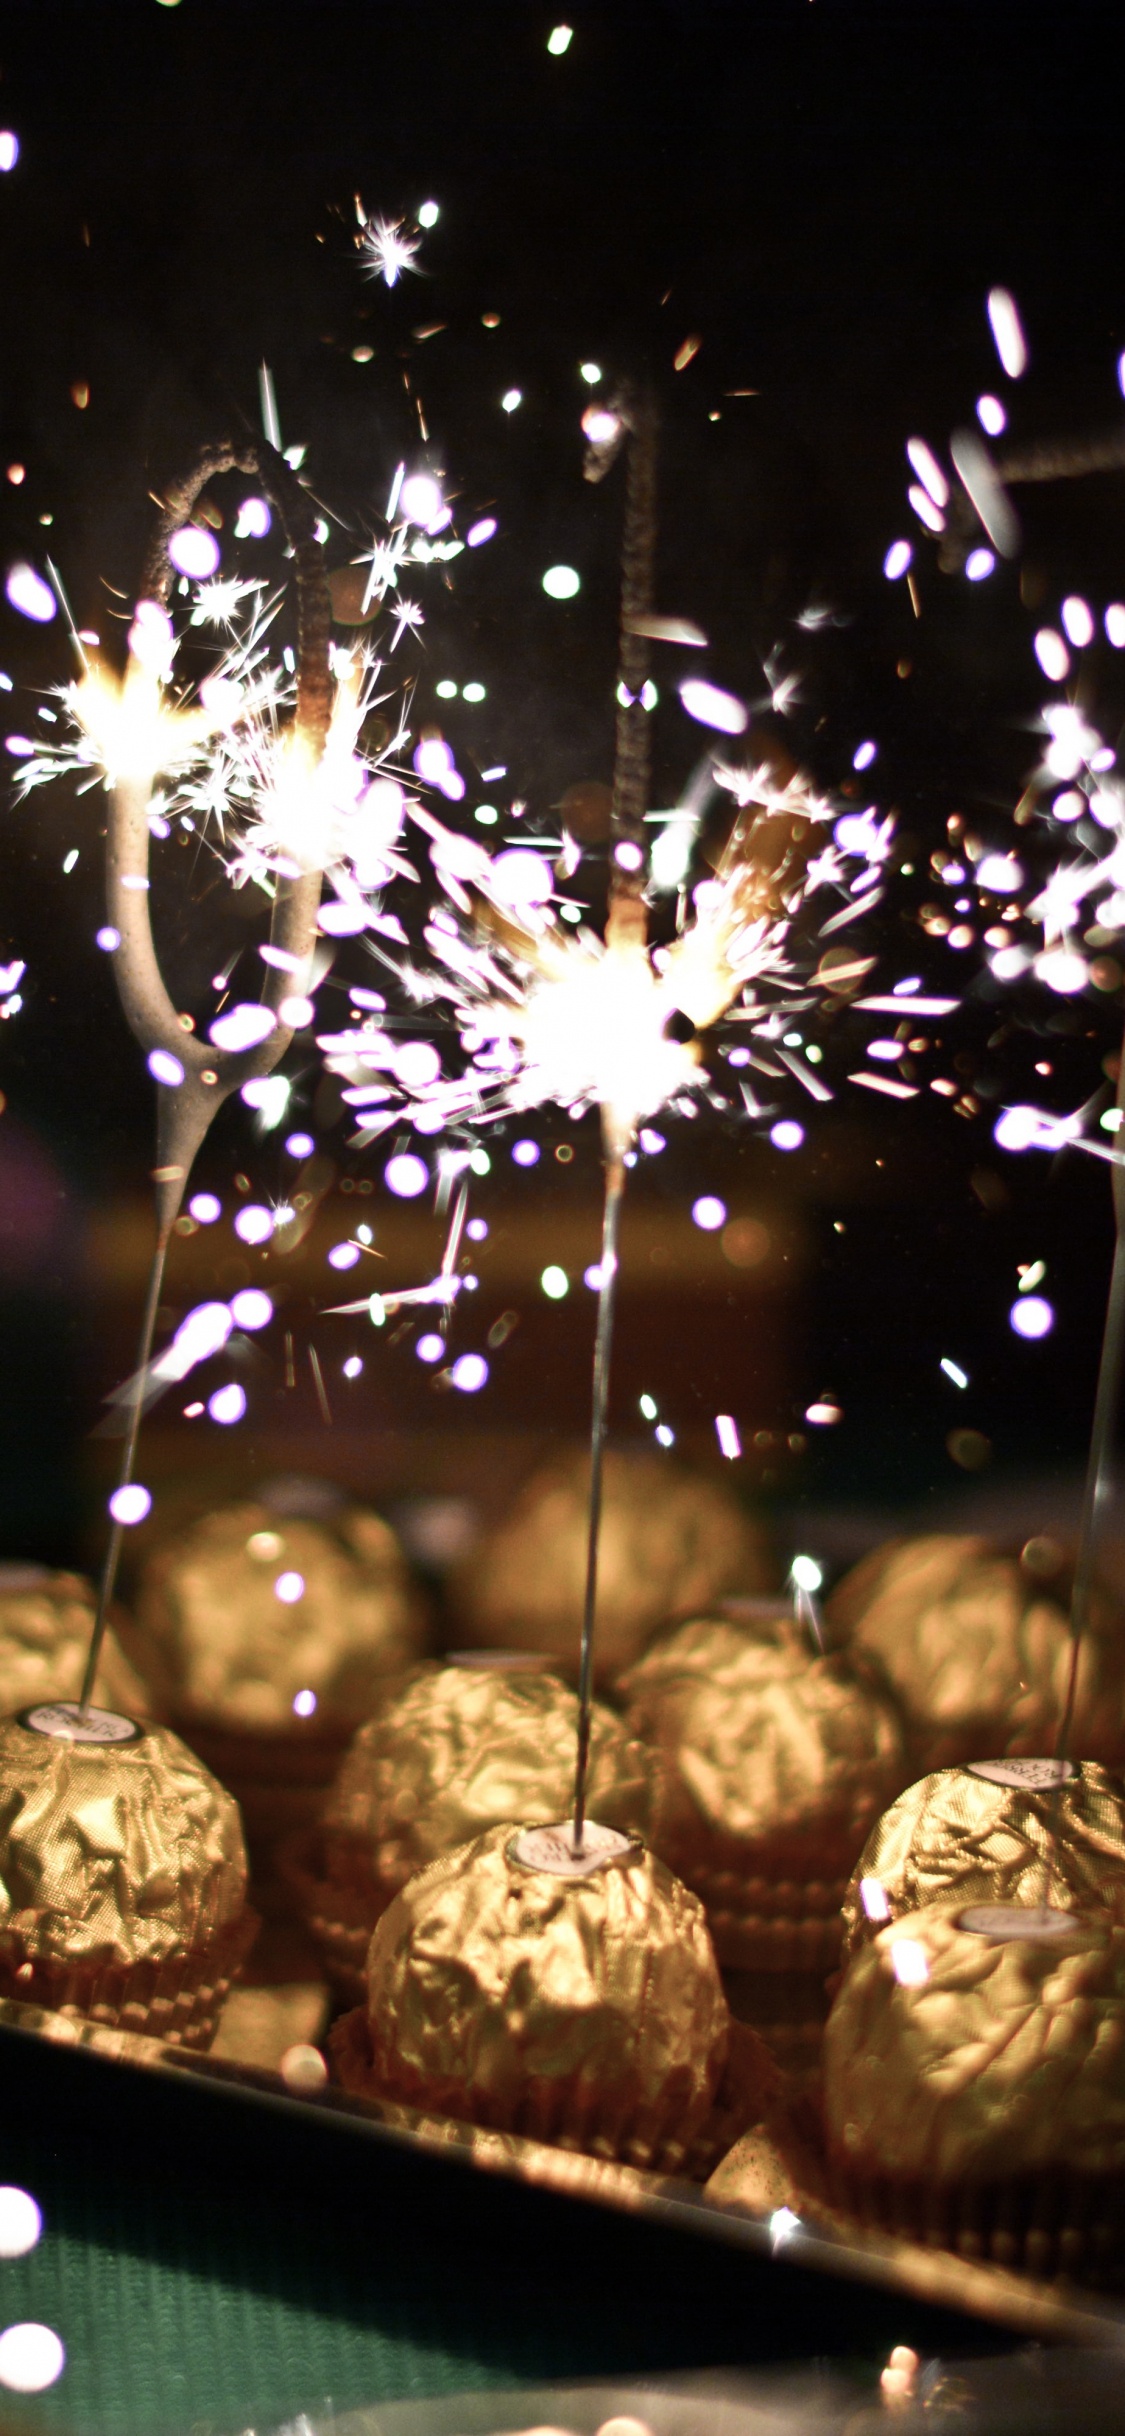 Chocolate Balls, Candy, Chocolate, Fireworks, Sparkler. Wallpaper in 1125x2436 Resolution